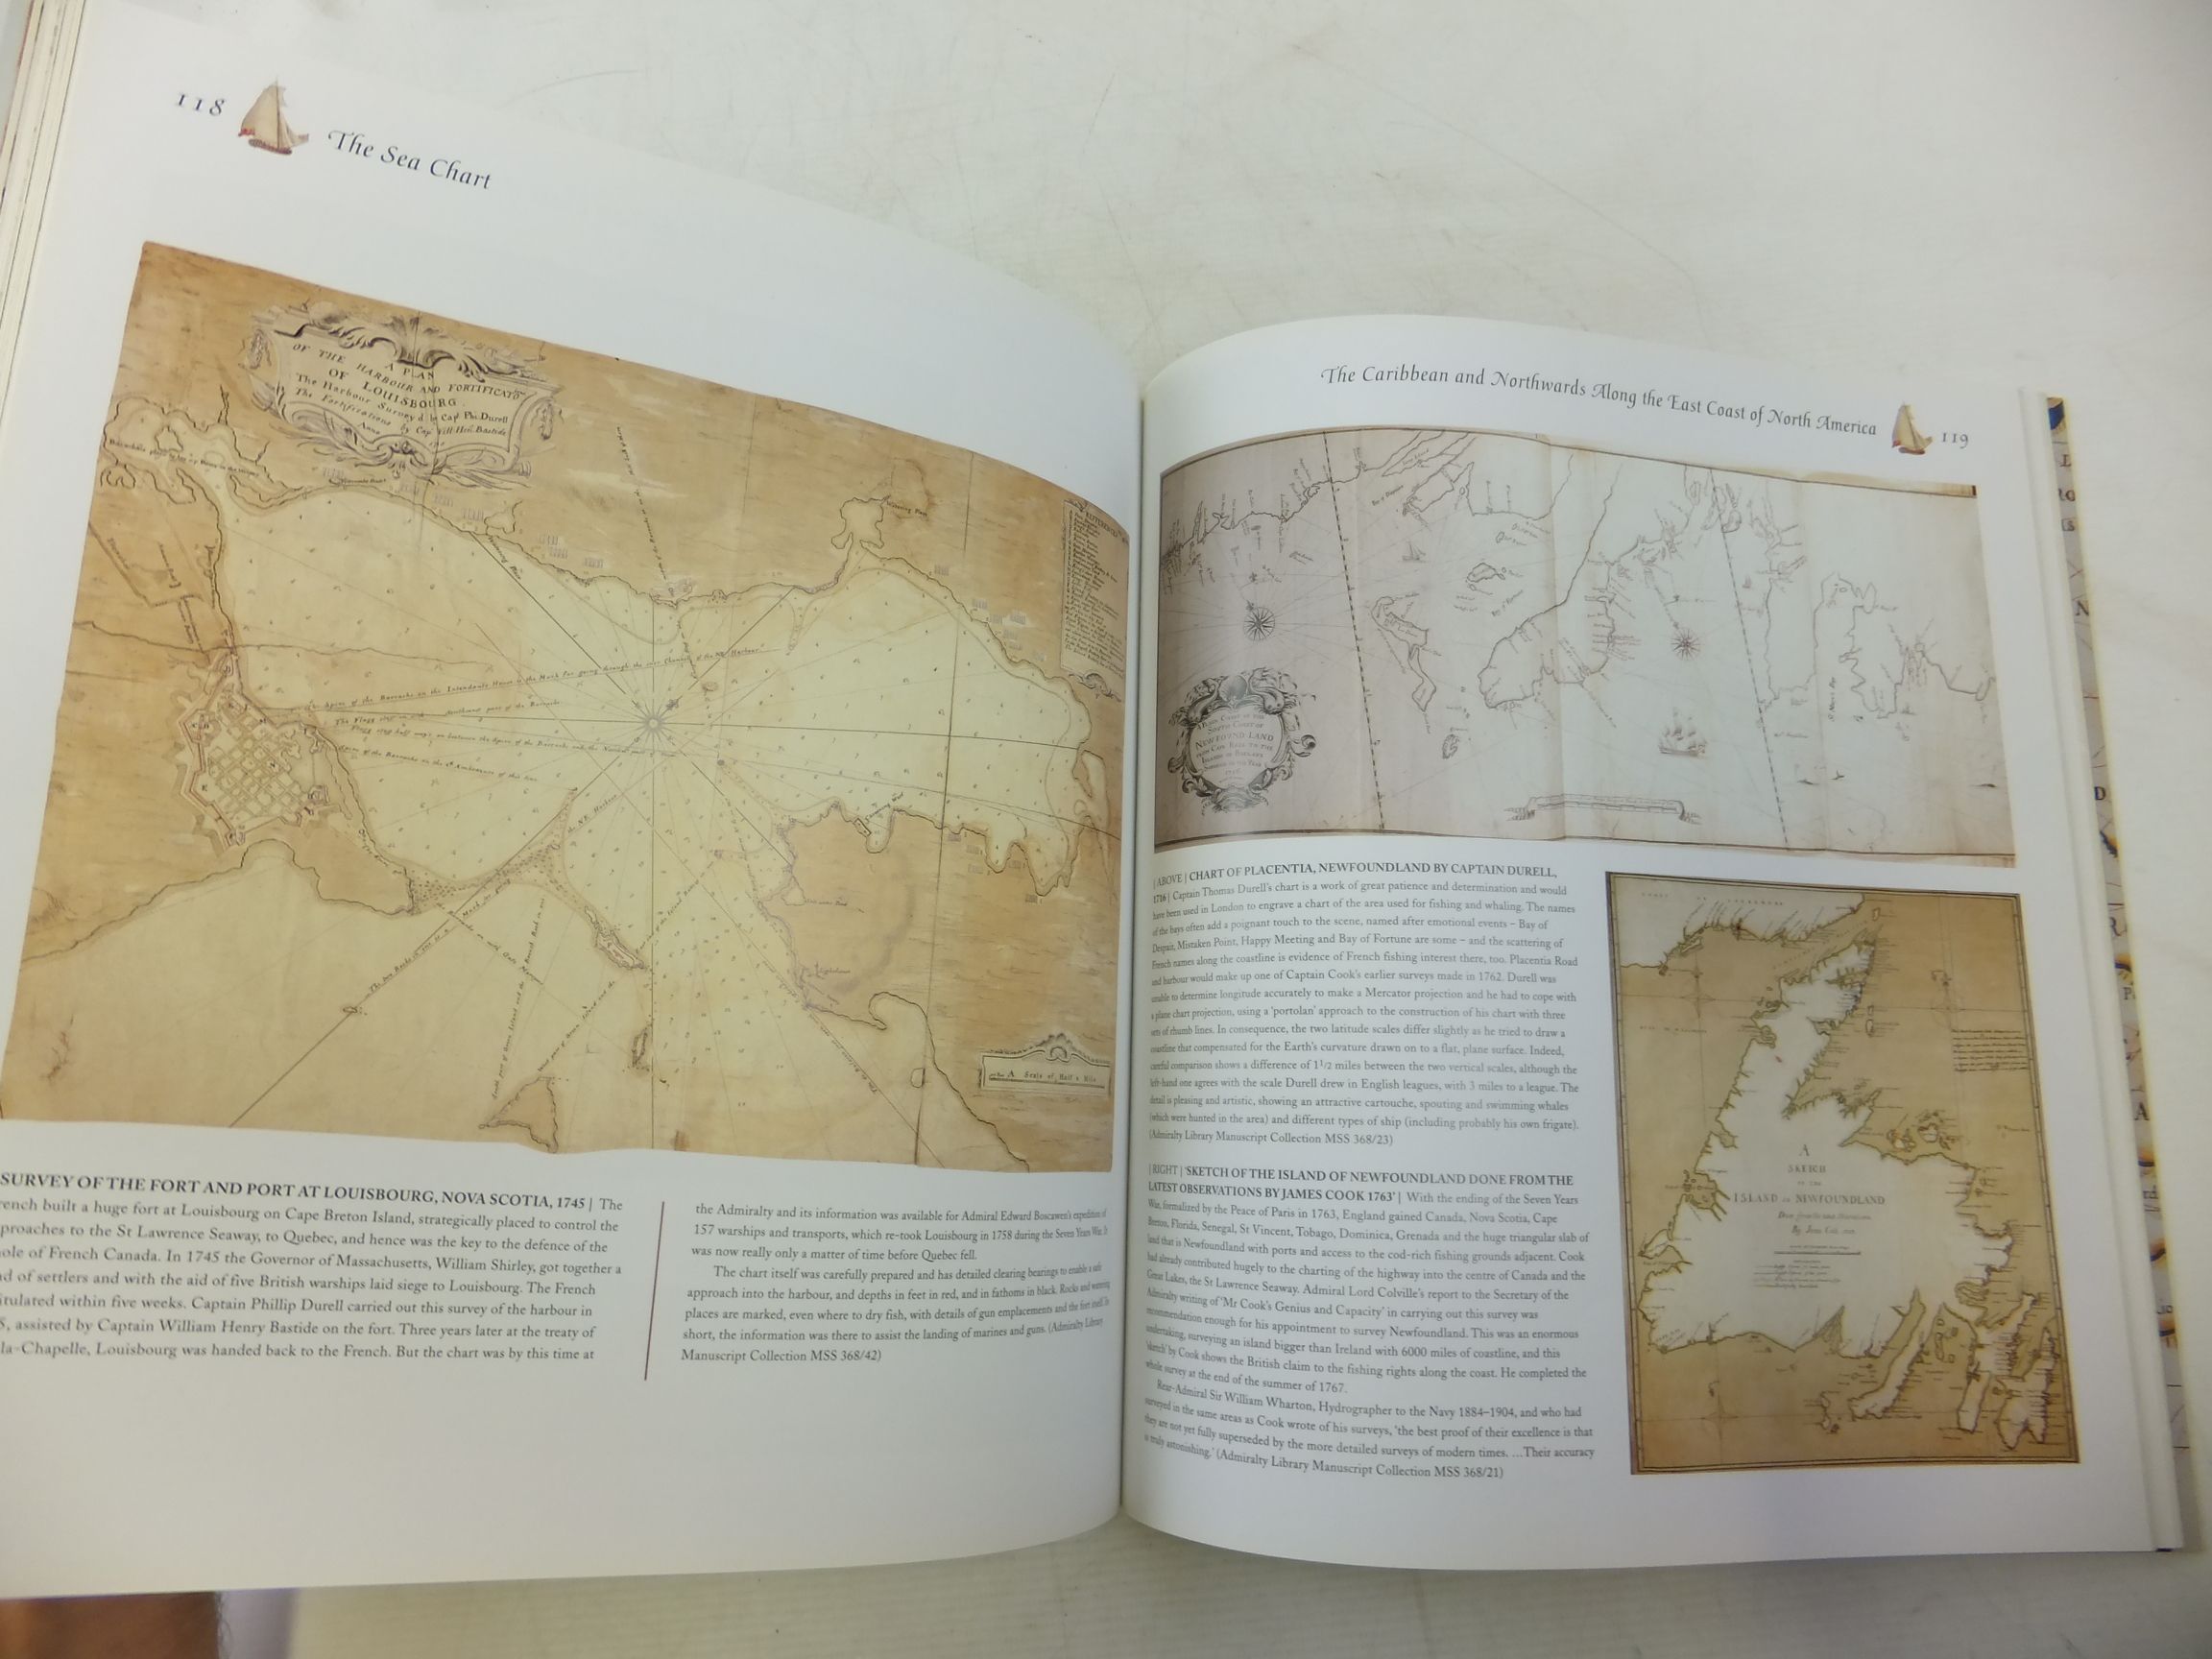 History Of Nautical Charts